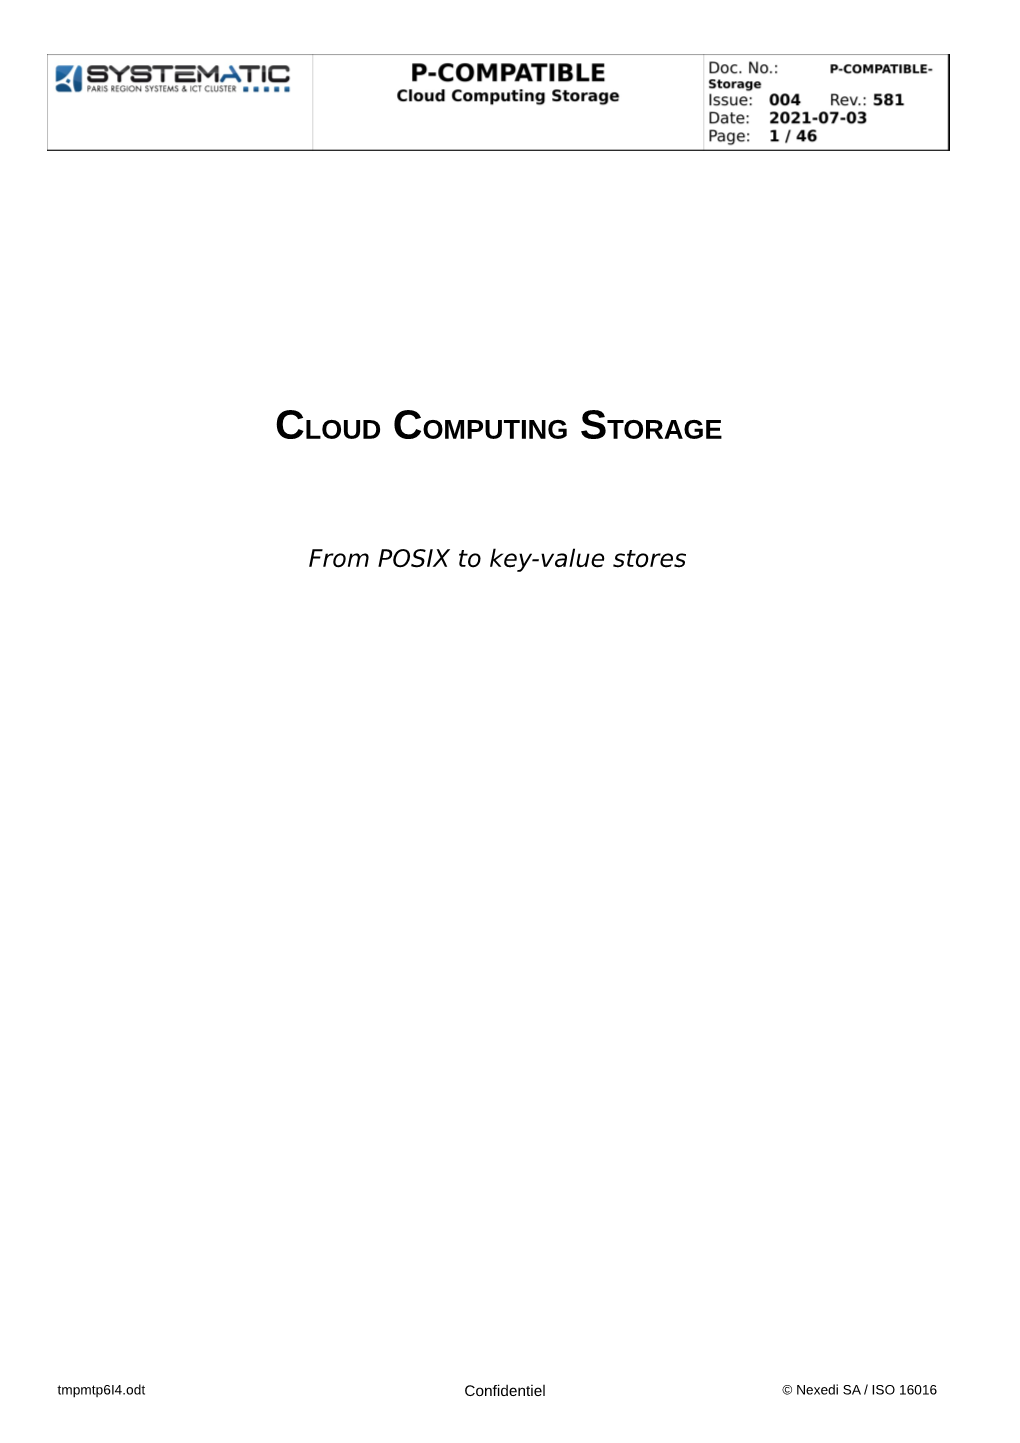 Cloud Computing Storage